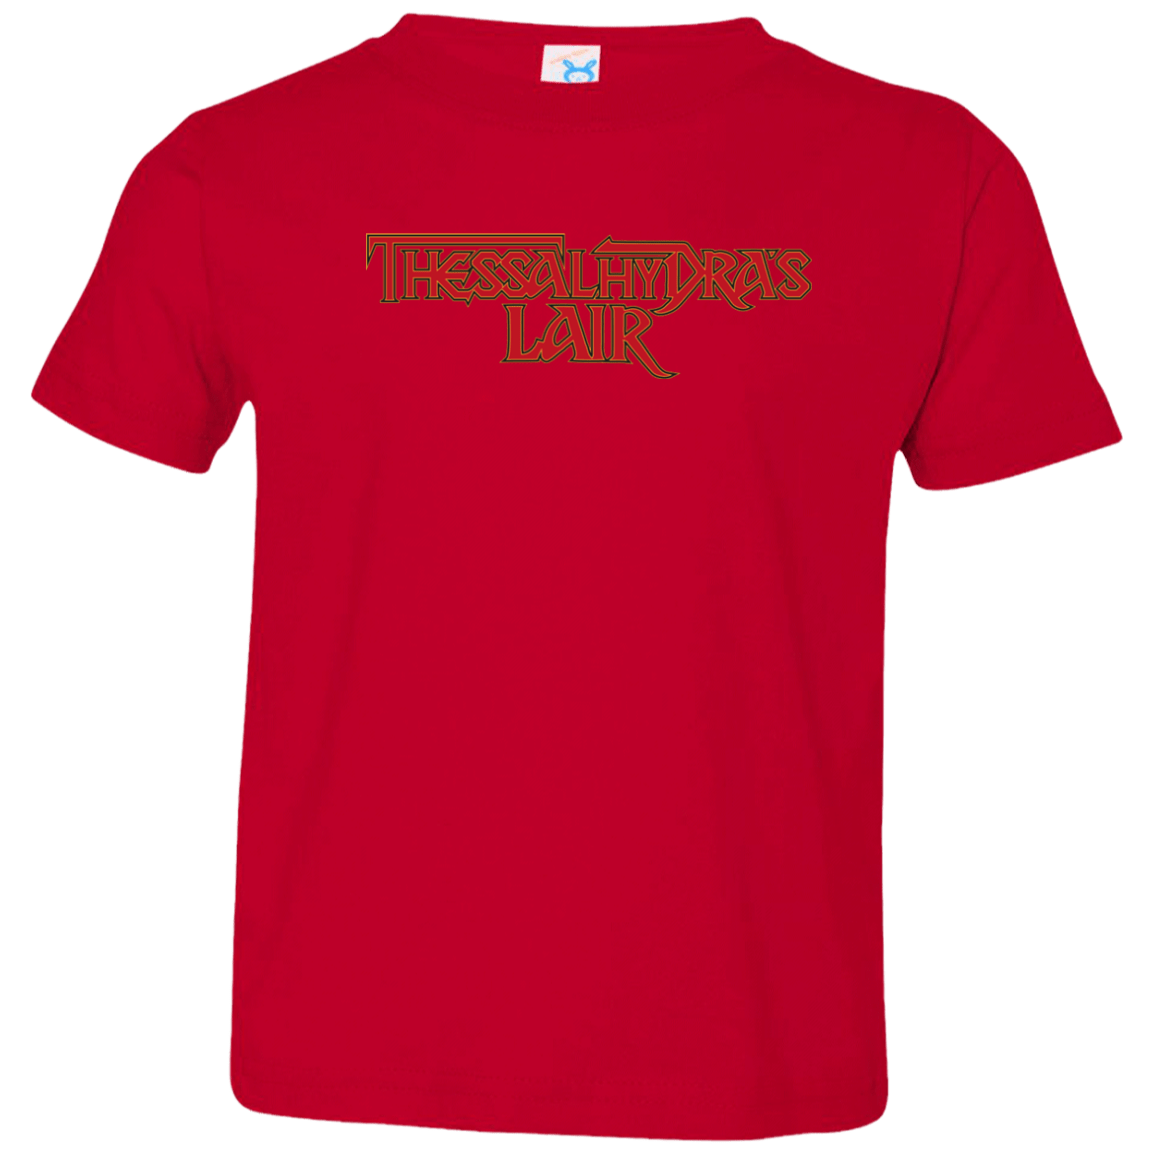 T-Shirts Red / 2T Thessalhydras Lair Toddler Premium T-Shirt